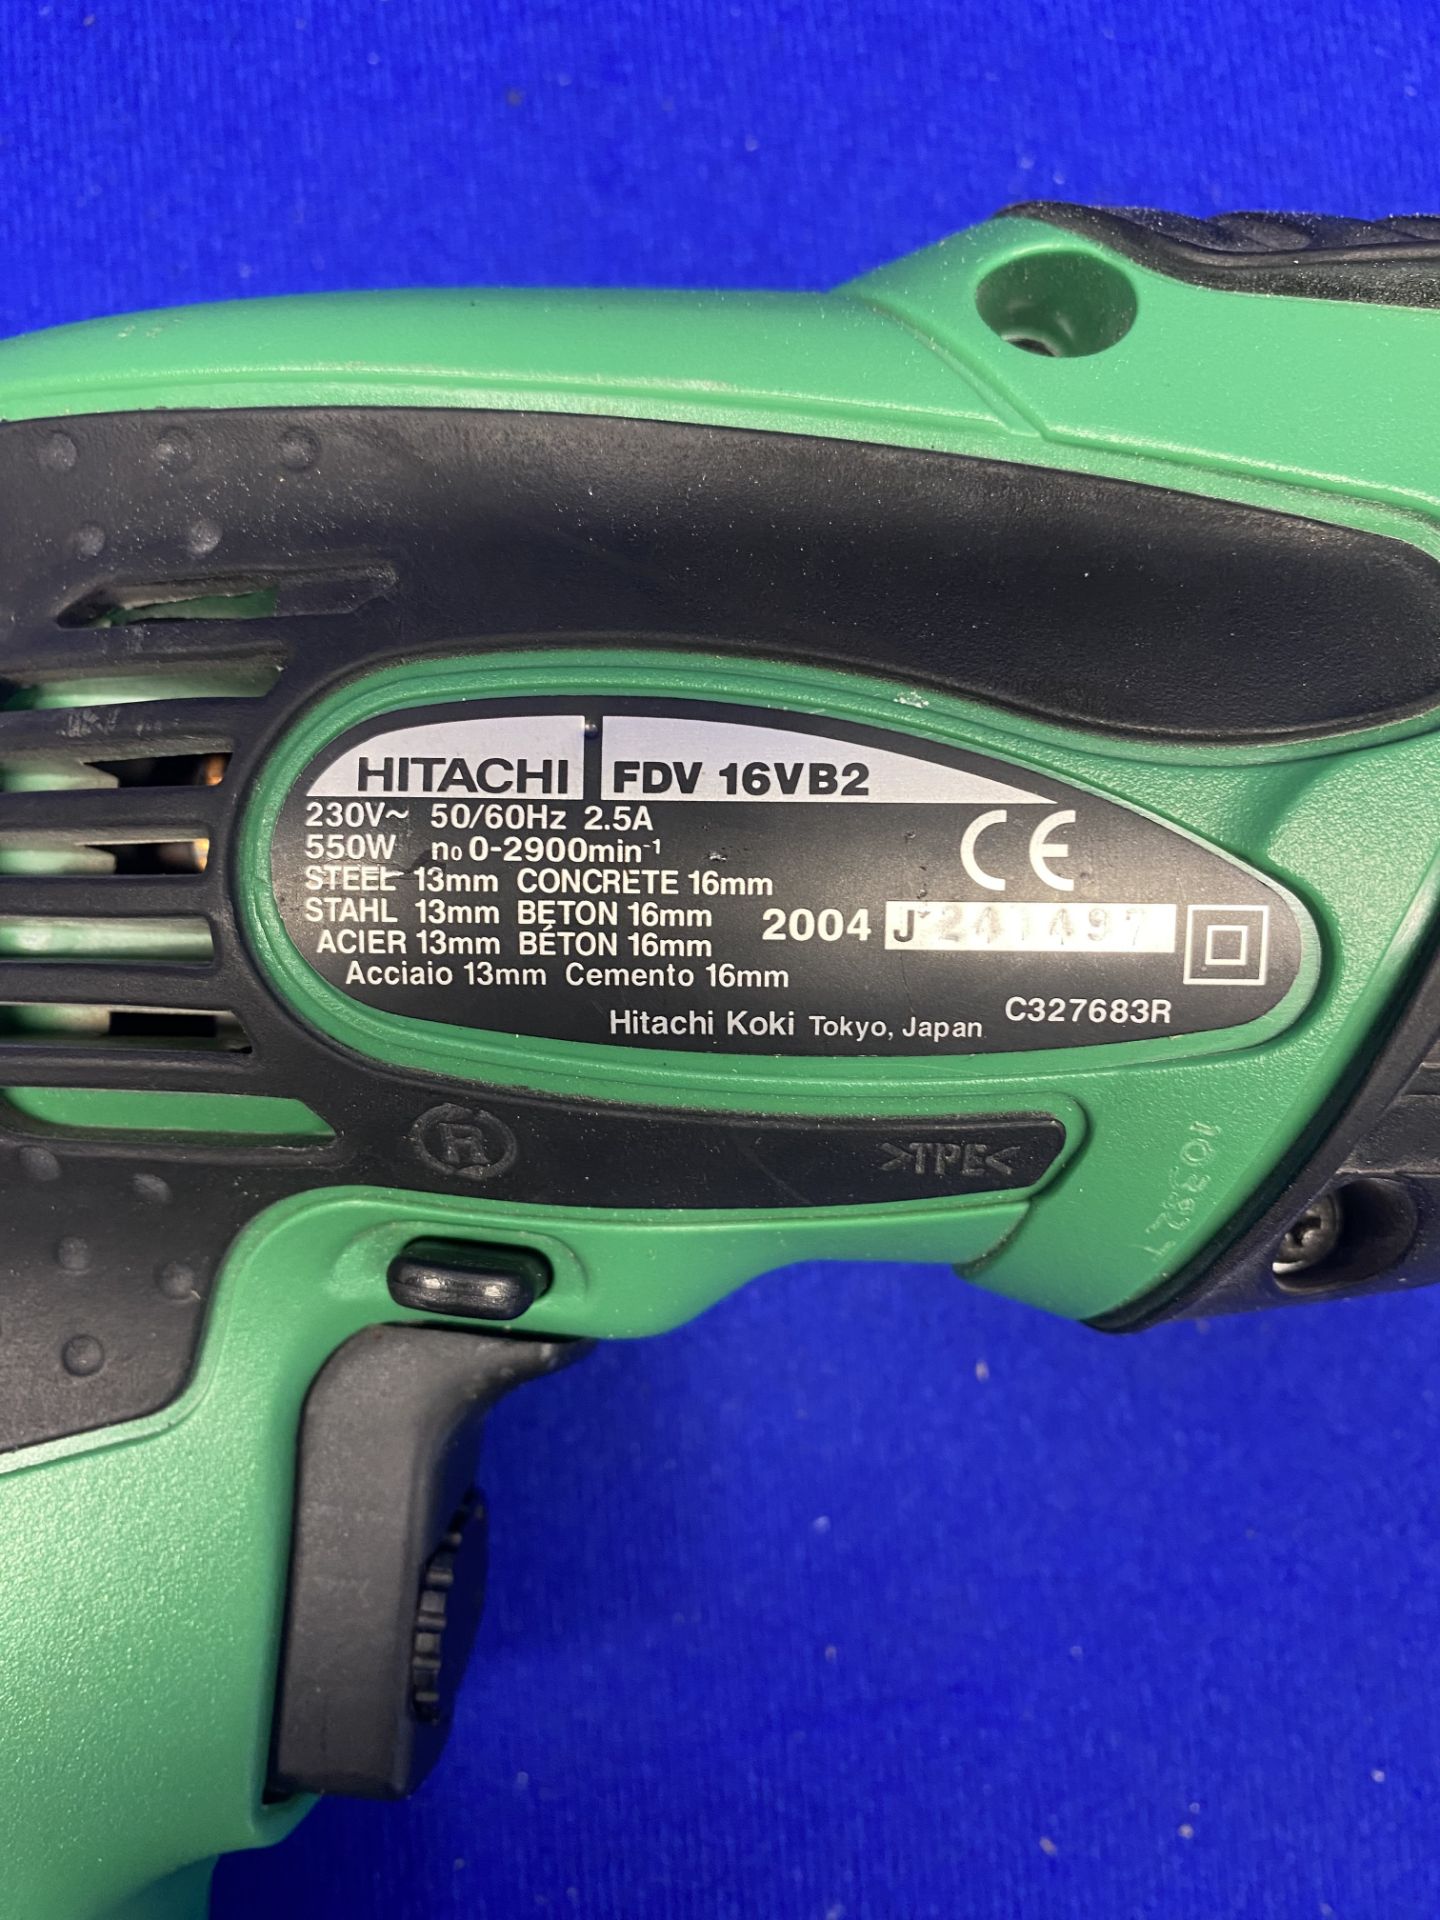 Hitachi FDV16VB2 13mm Impact Drill 550W - Image 7 of 8